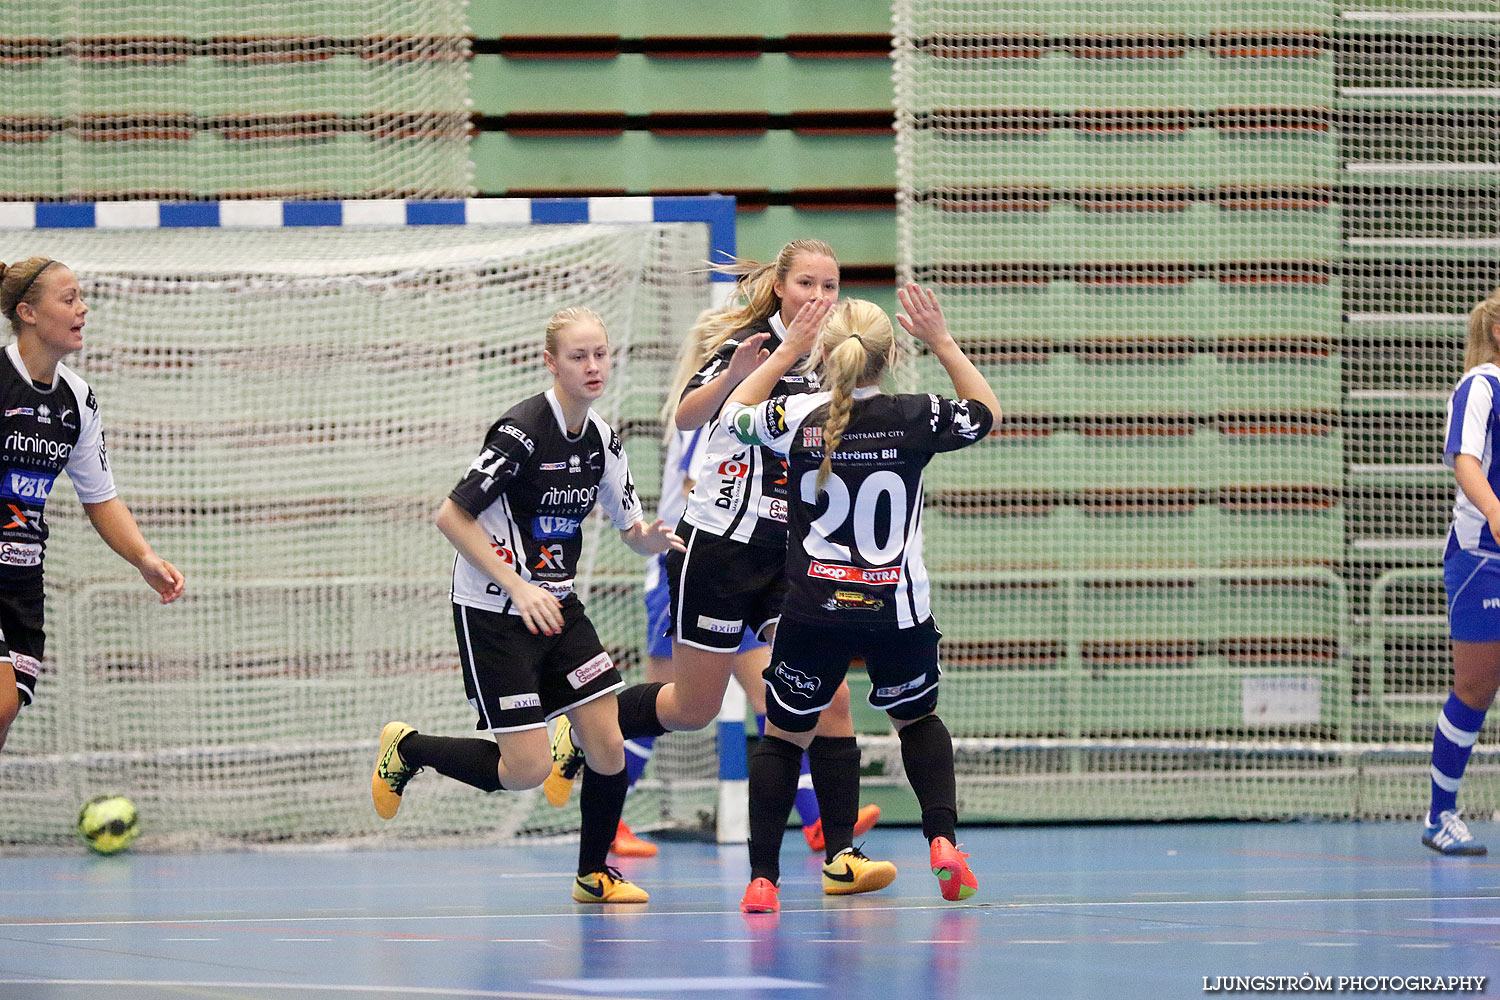 Skövde Futsalcup Damer Skövde KIK-Habo IF,dam,Arena Skövde,Skövde,Sverige,Skövde Futsalcup 2015,Futsal,2015,124495